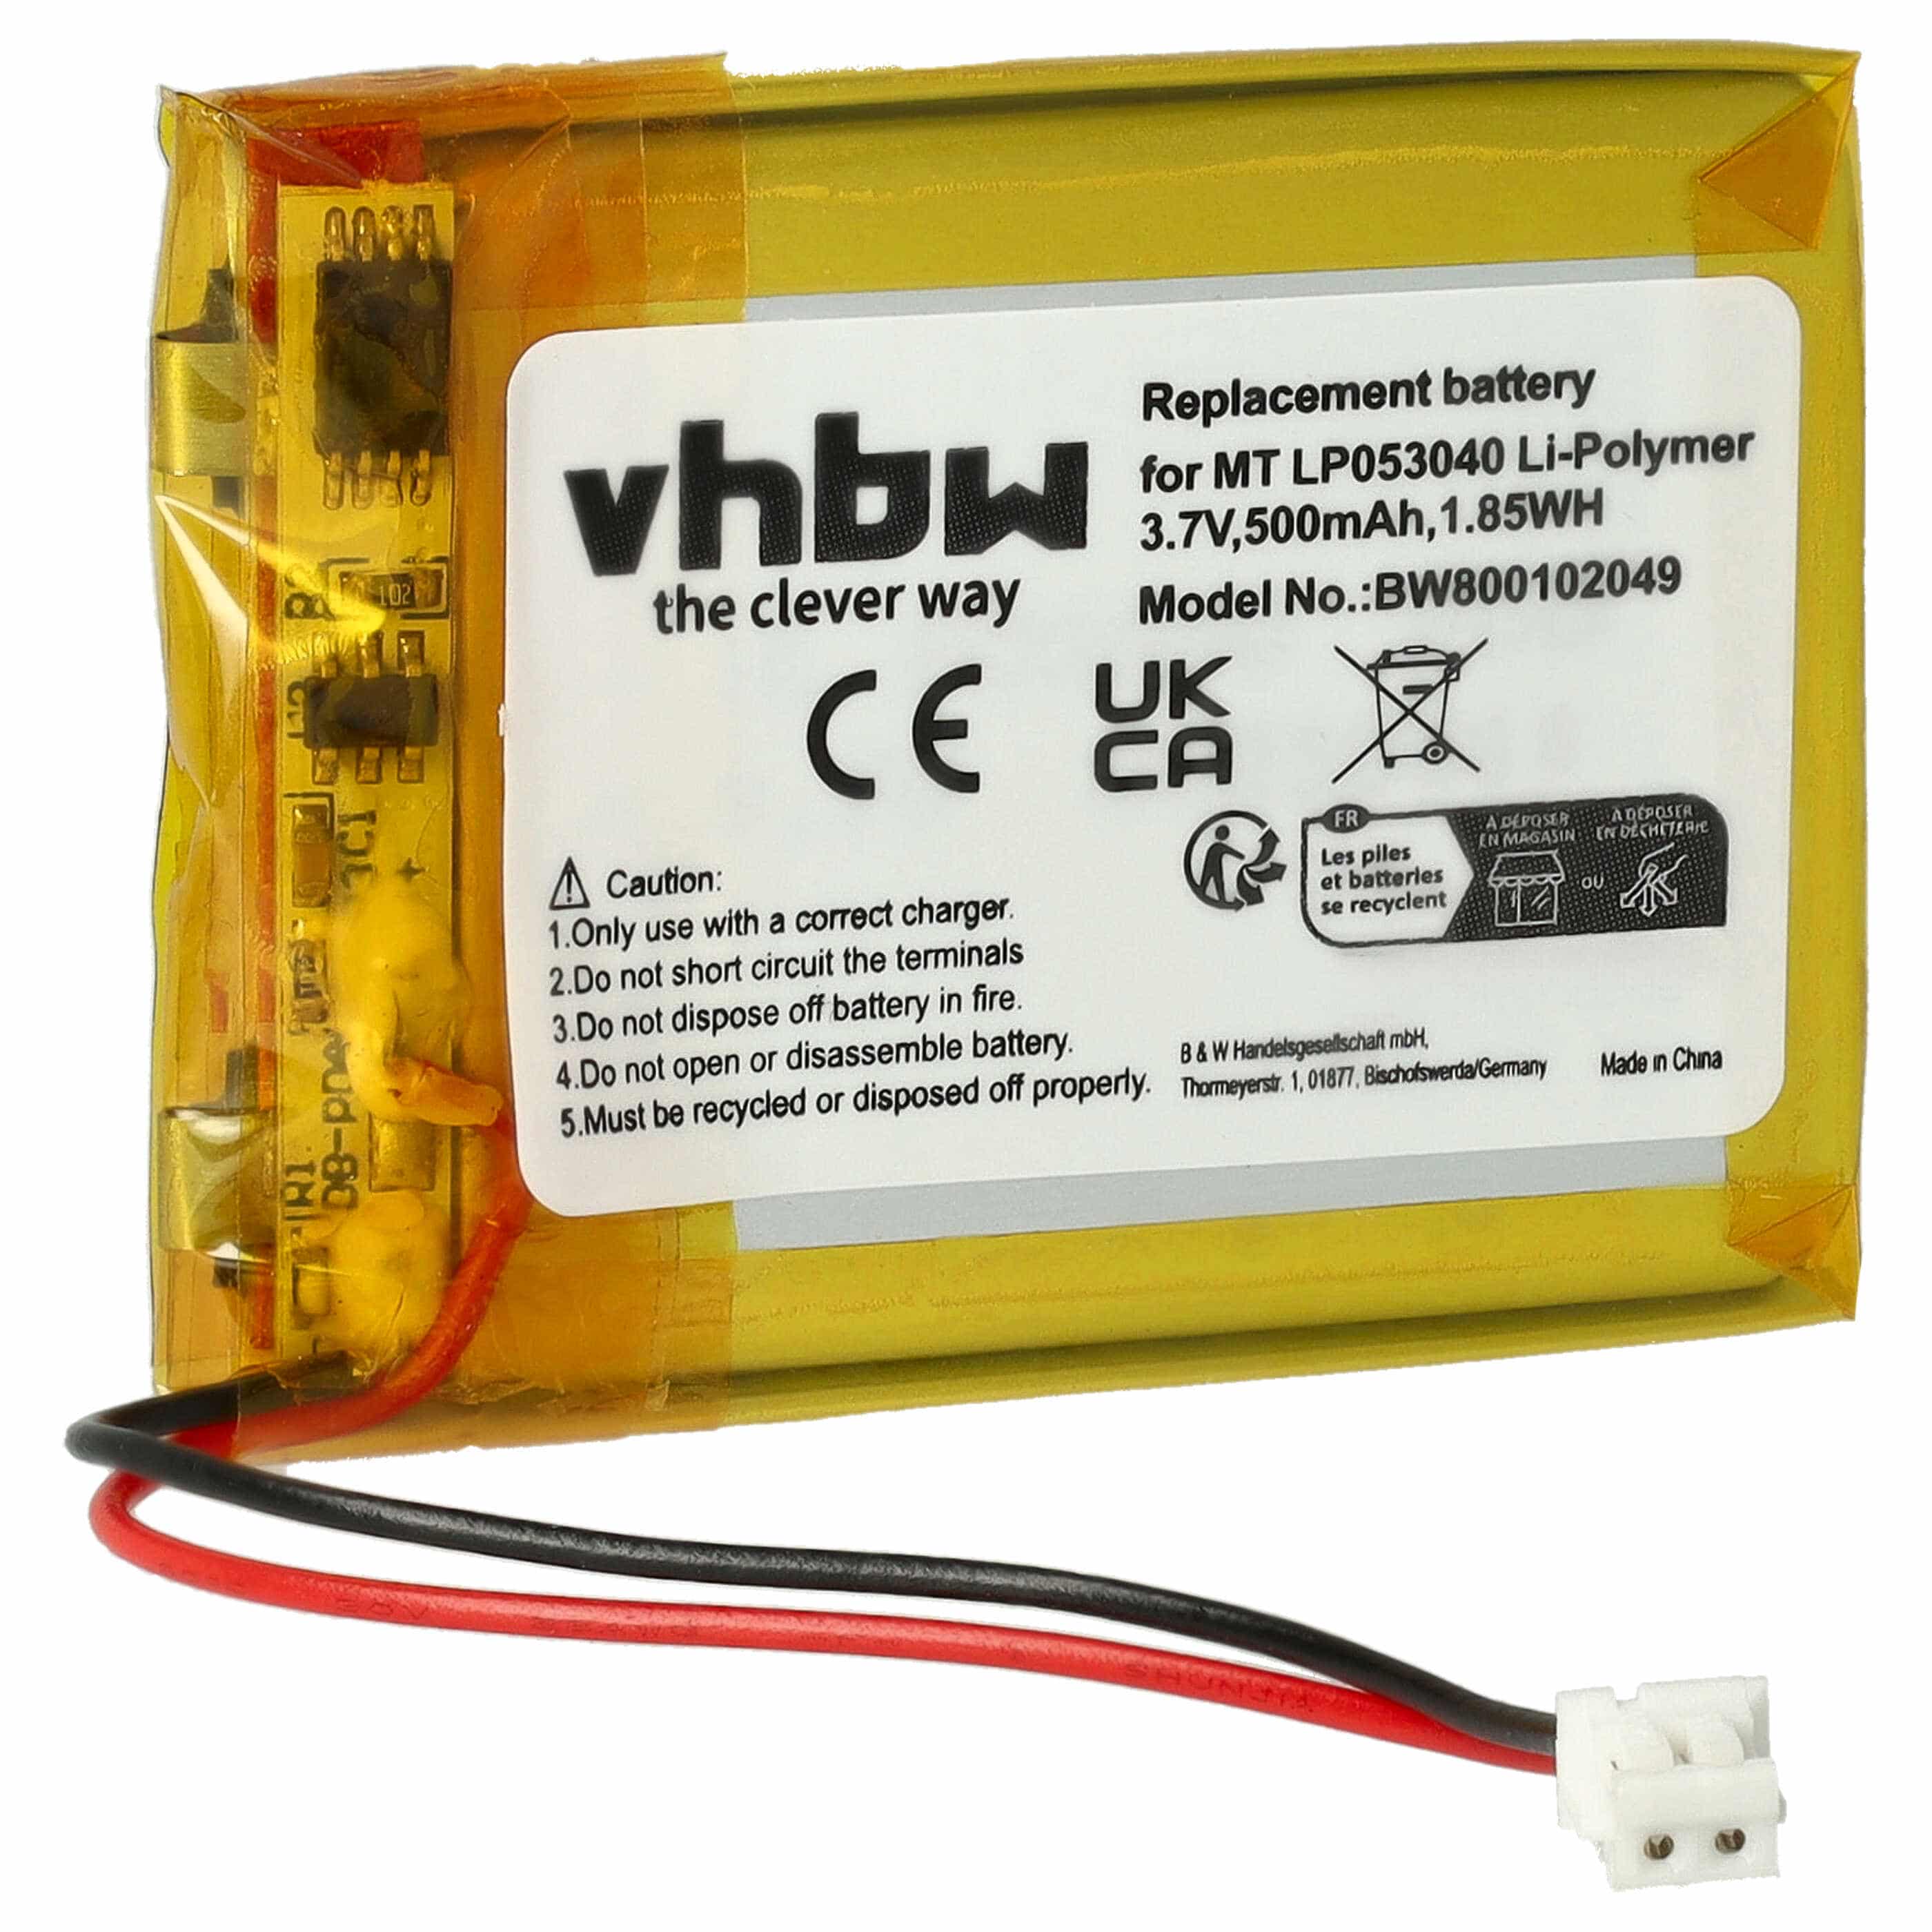 Landline Phone Battery Replacement for MT LP053040 - 600mAh 3.7V Li-polymer